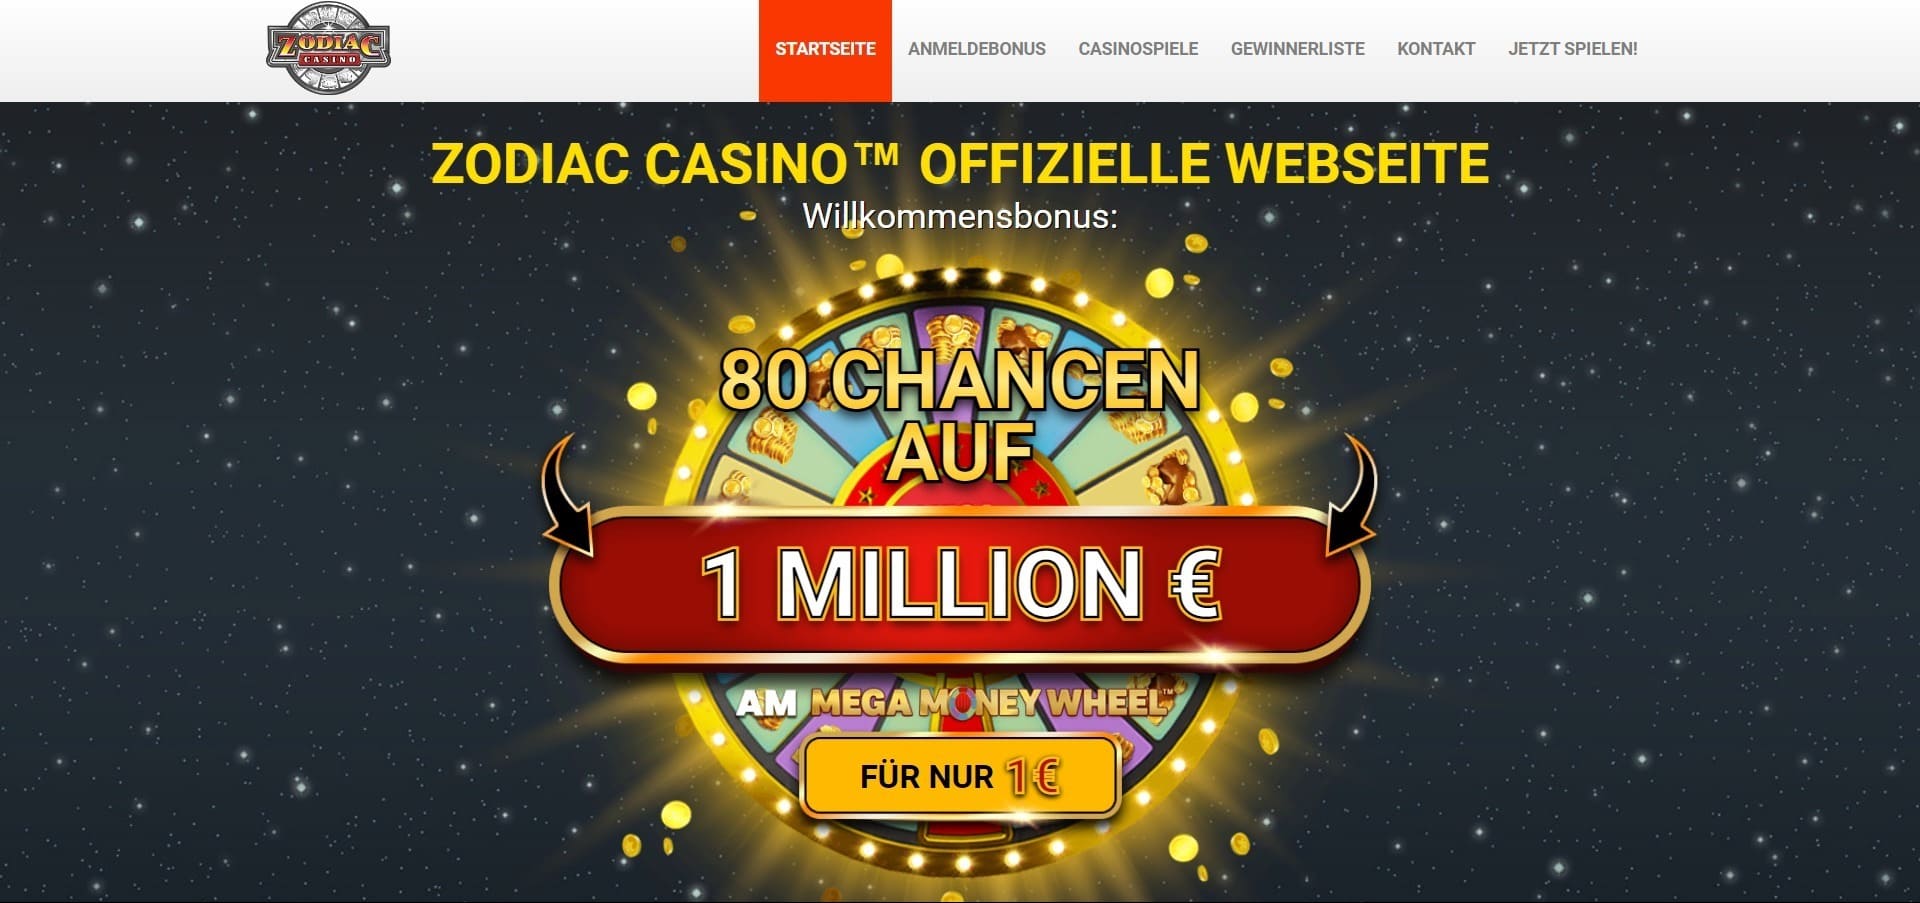 Offizielle Website der Zodiac Casino